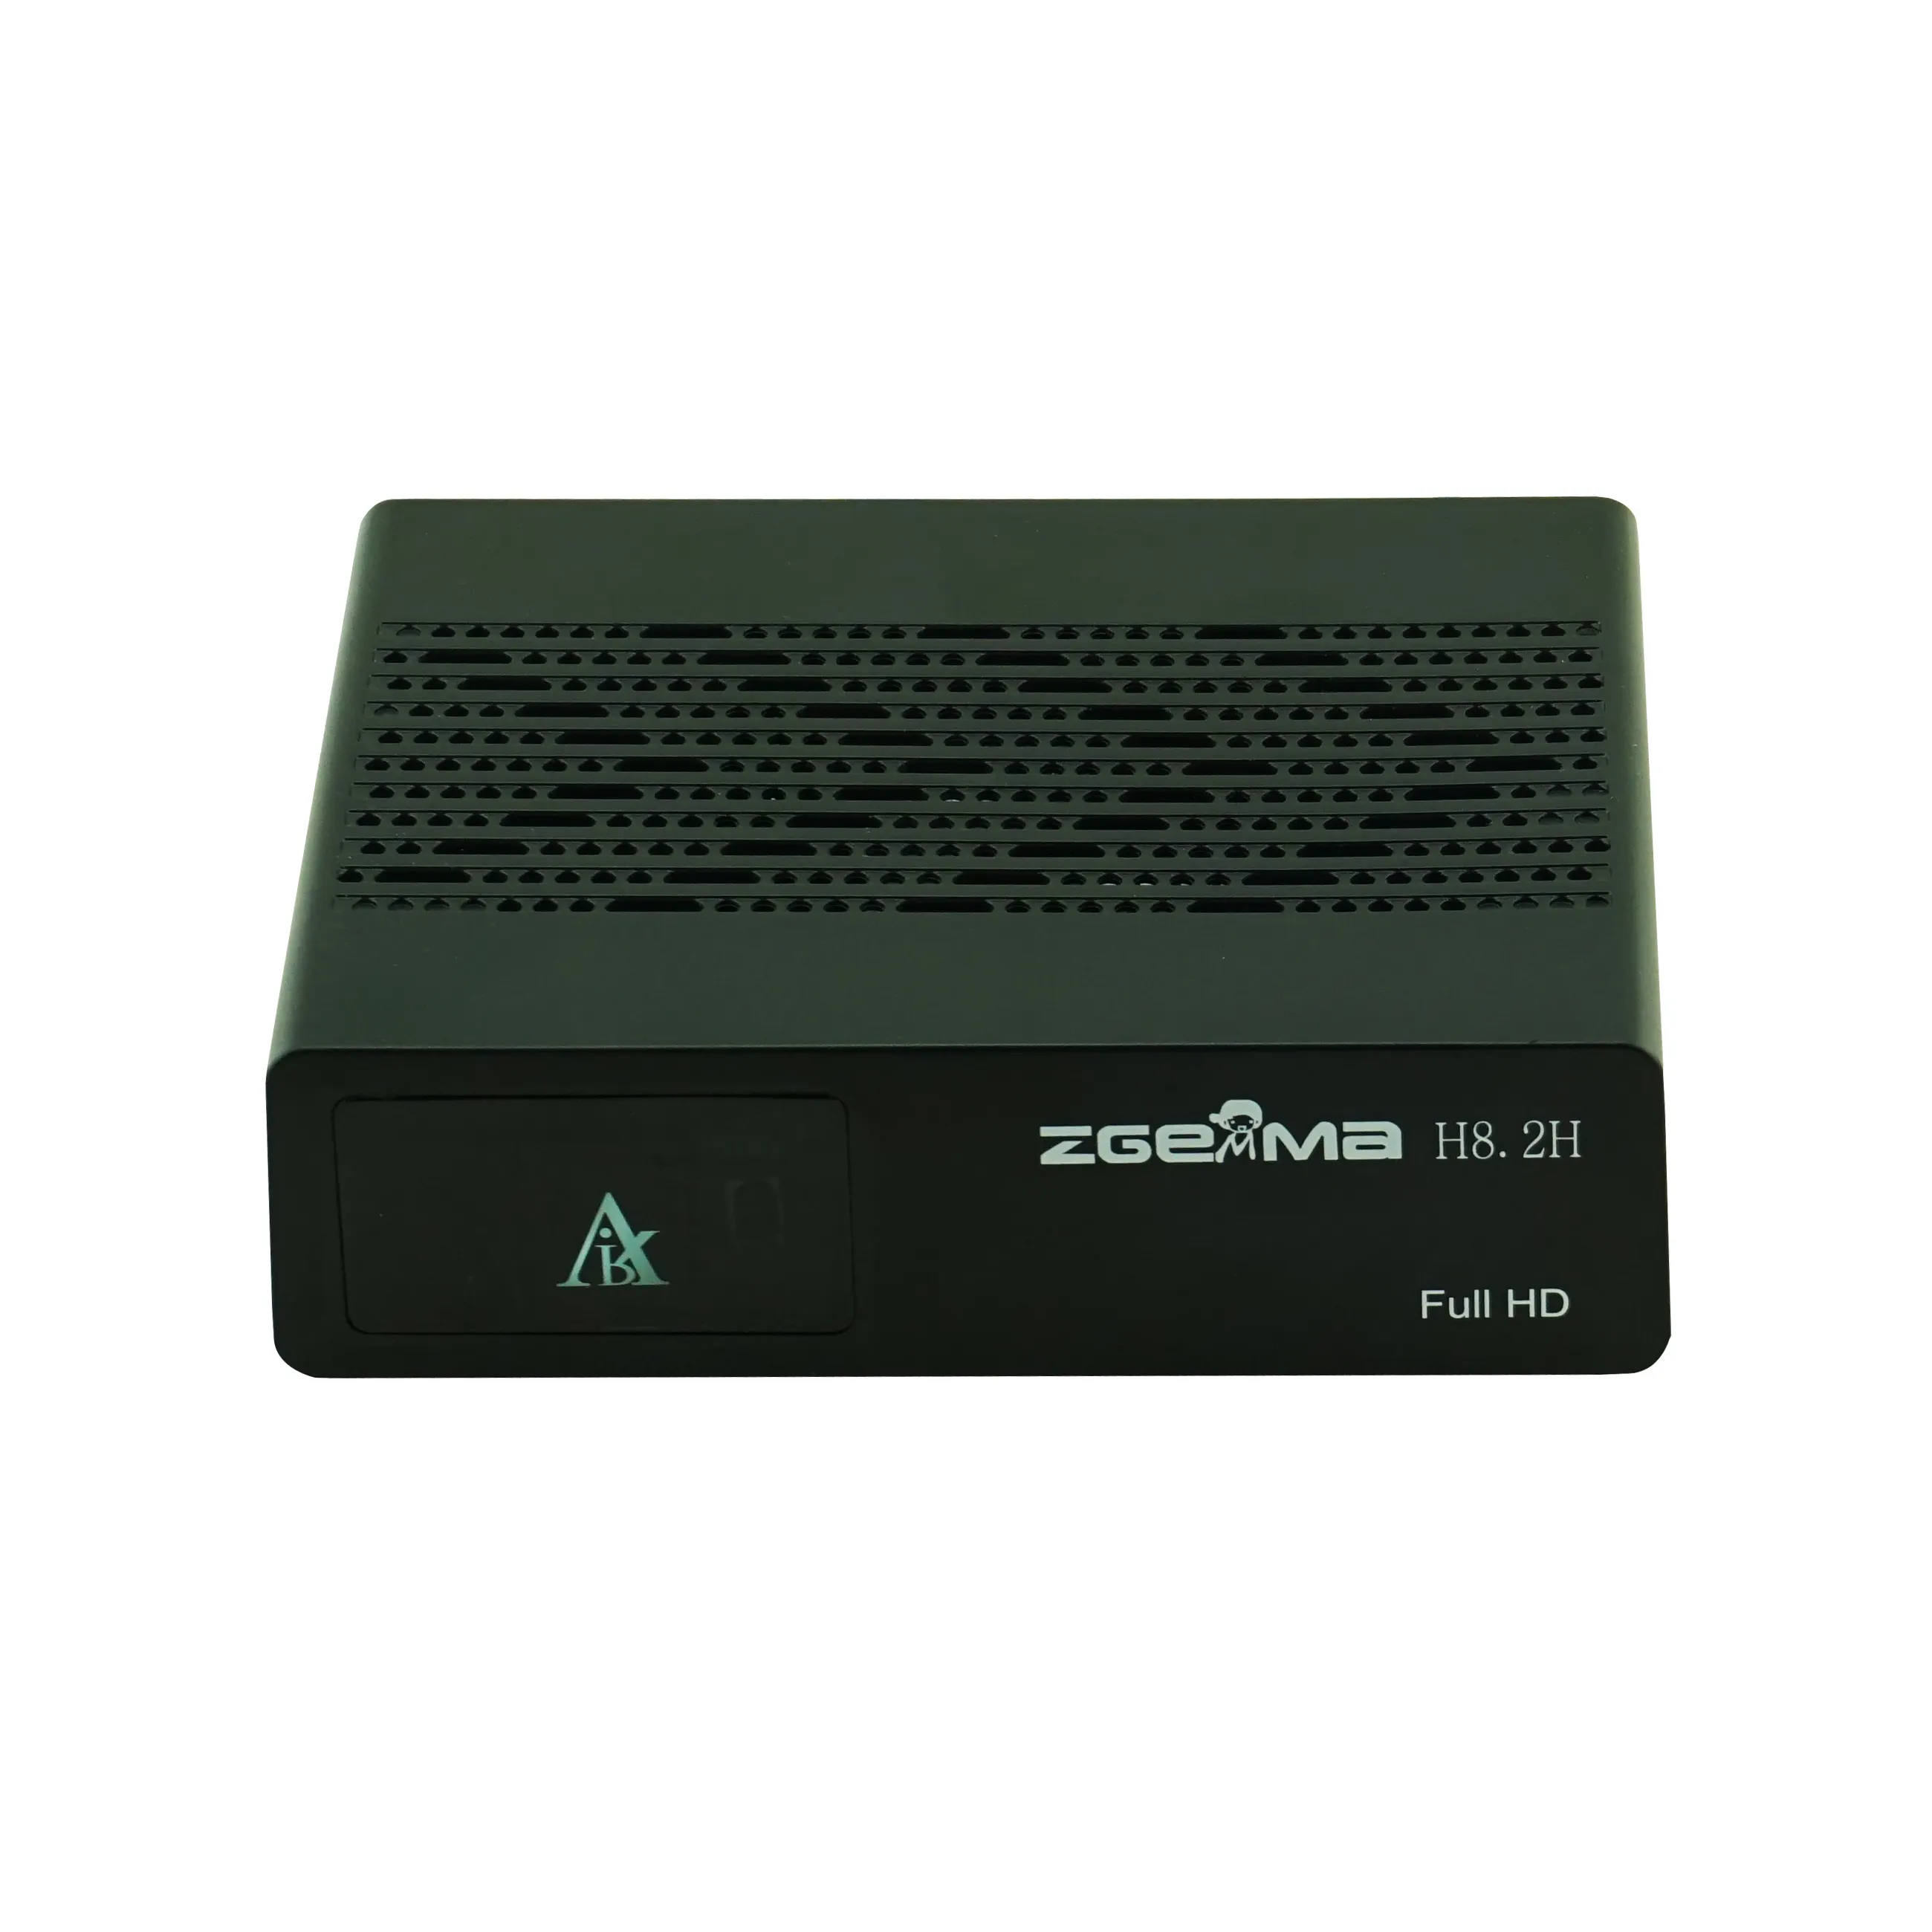 FTA 디지털 스마트 TV 디코더 ZGEMMA H8.2H 와 리눅스 OS DVB S2X + DVB-T2/C 콤보 튜너 위성 TV 수신